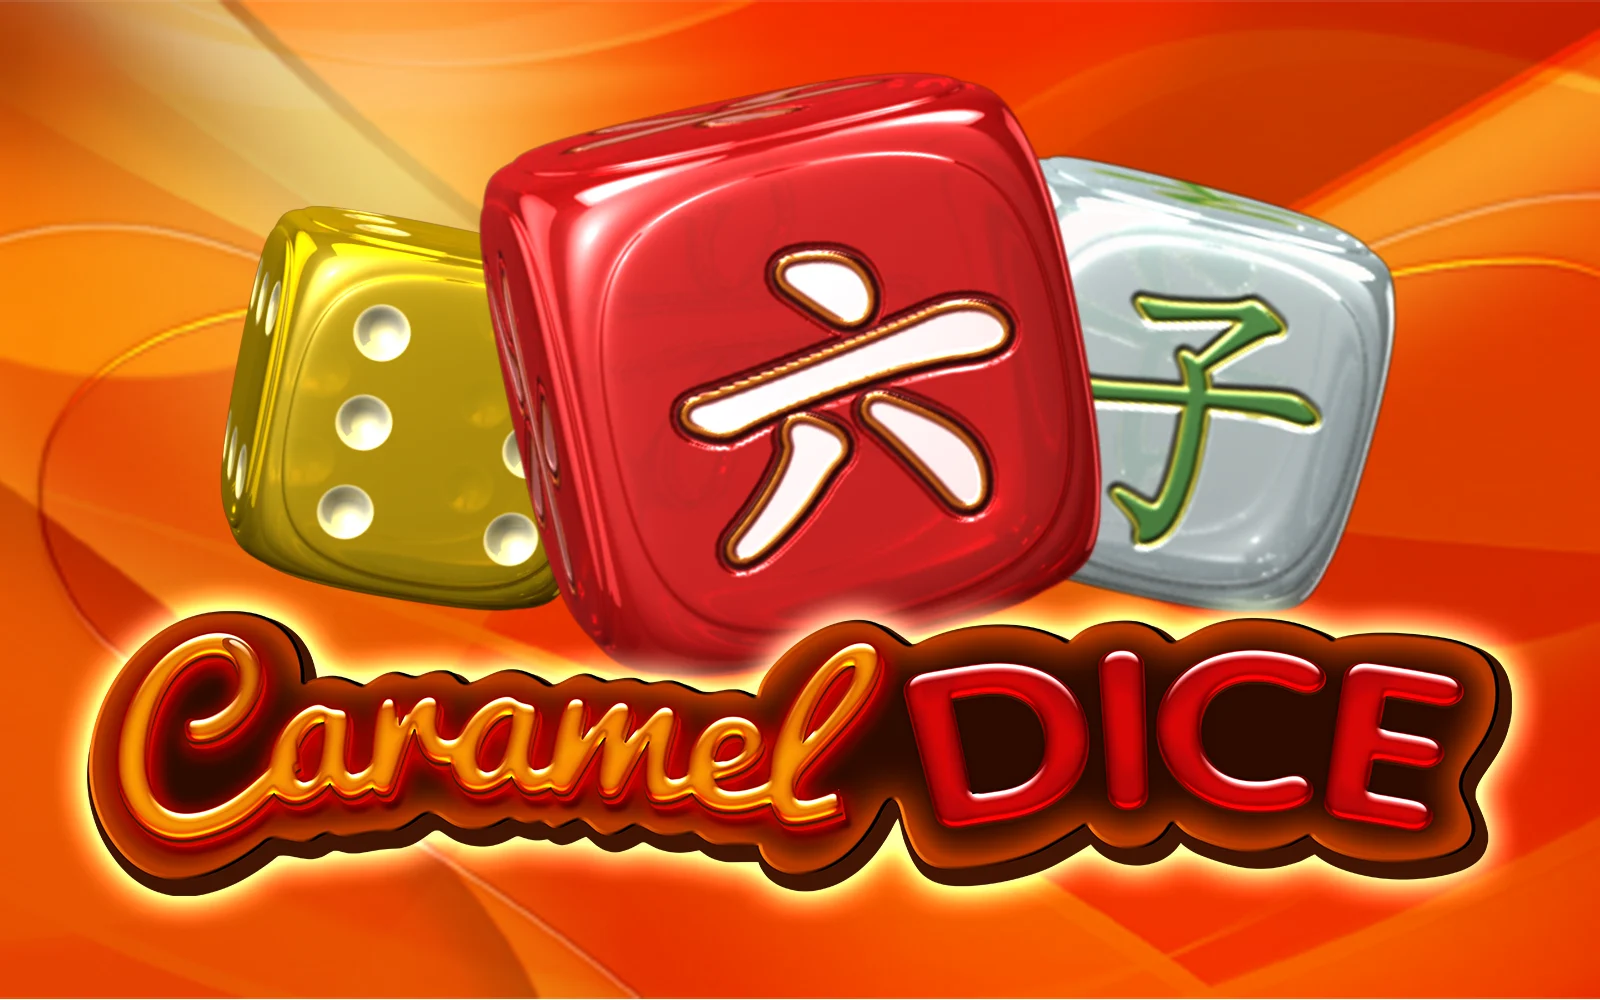 Play Caramel Dice on Starcasino.be online casino